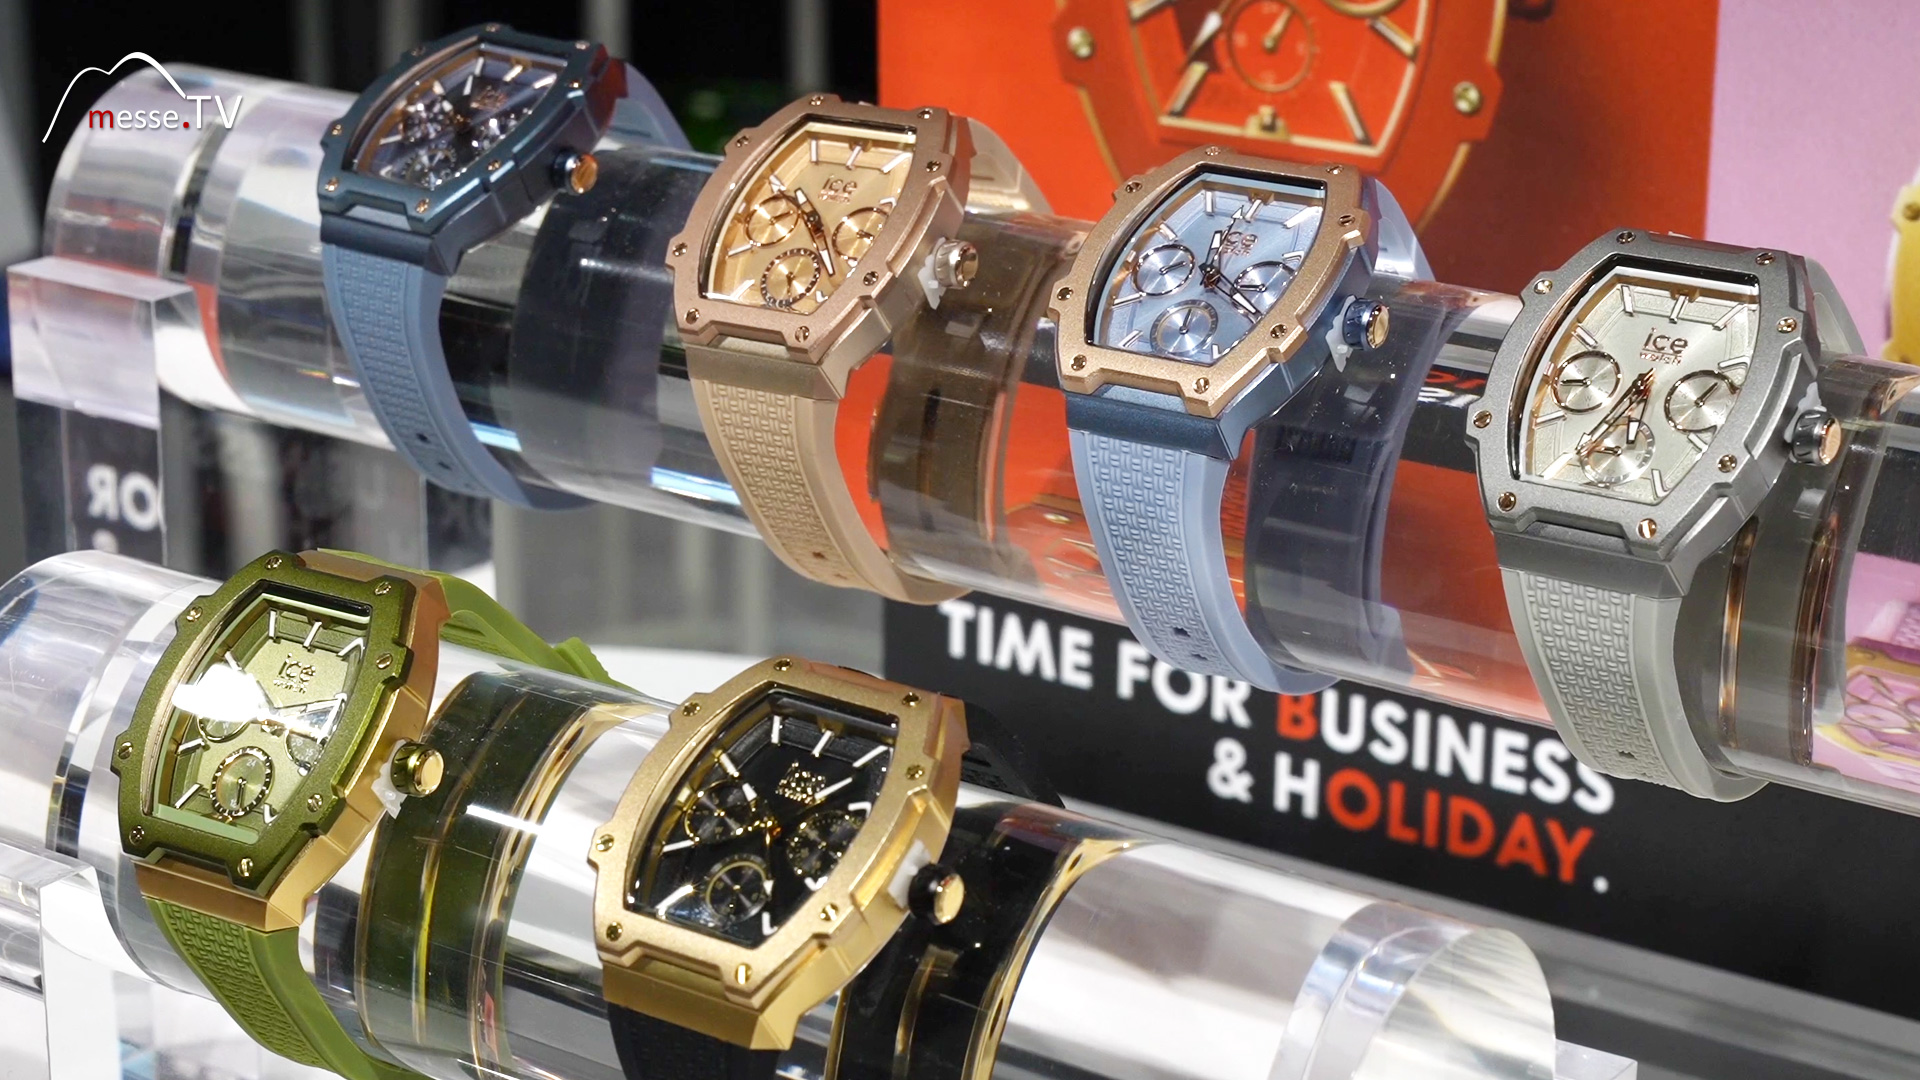 Farbenfrohe elegante Business Holiday Armbanduhren Ice Watch